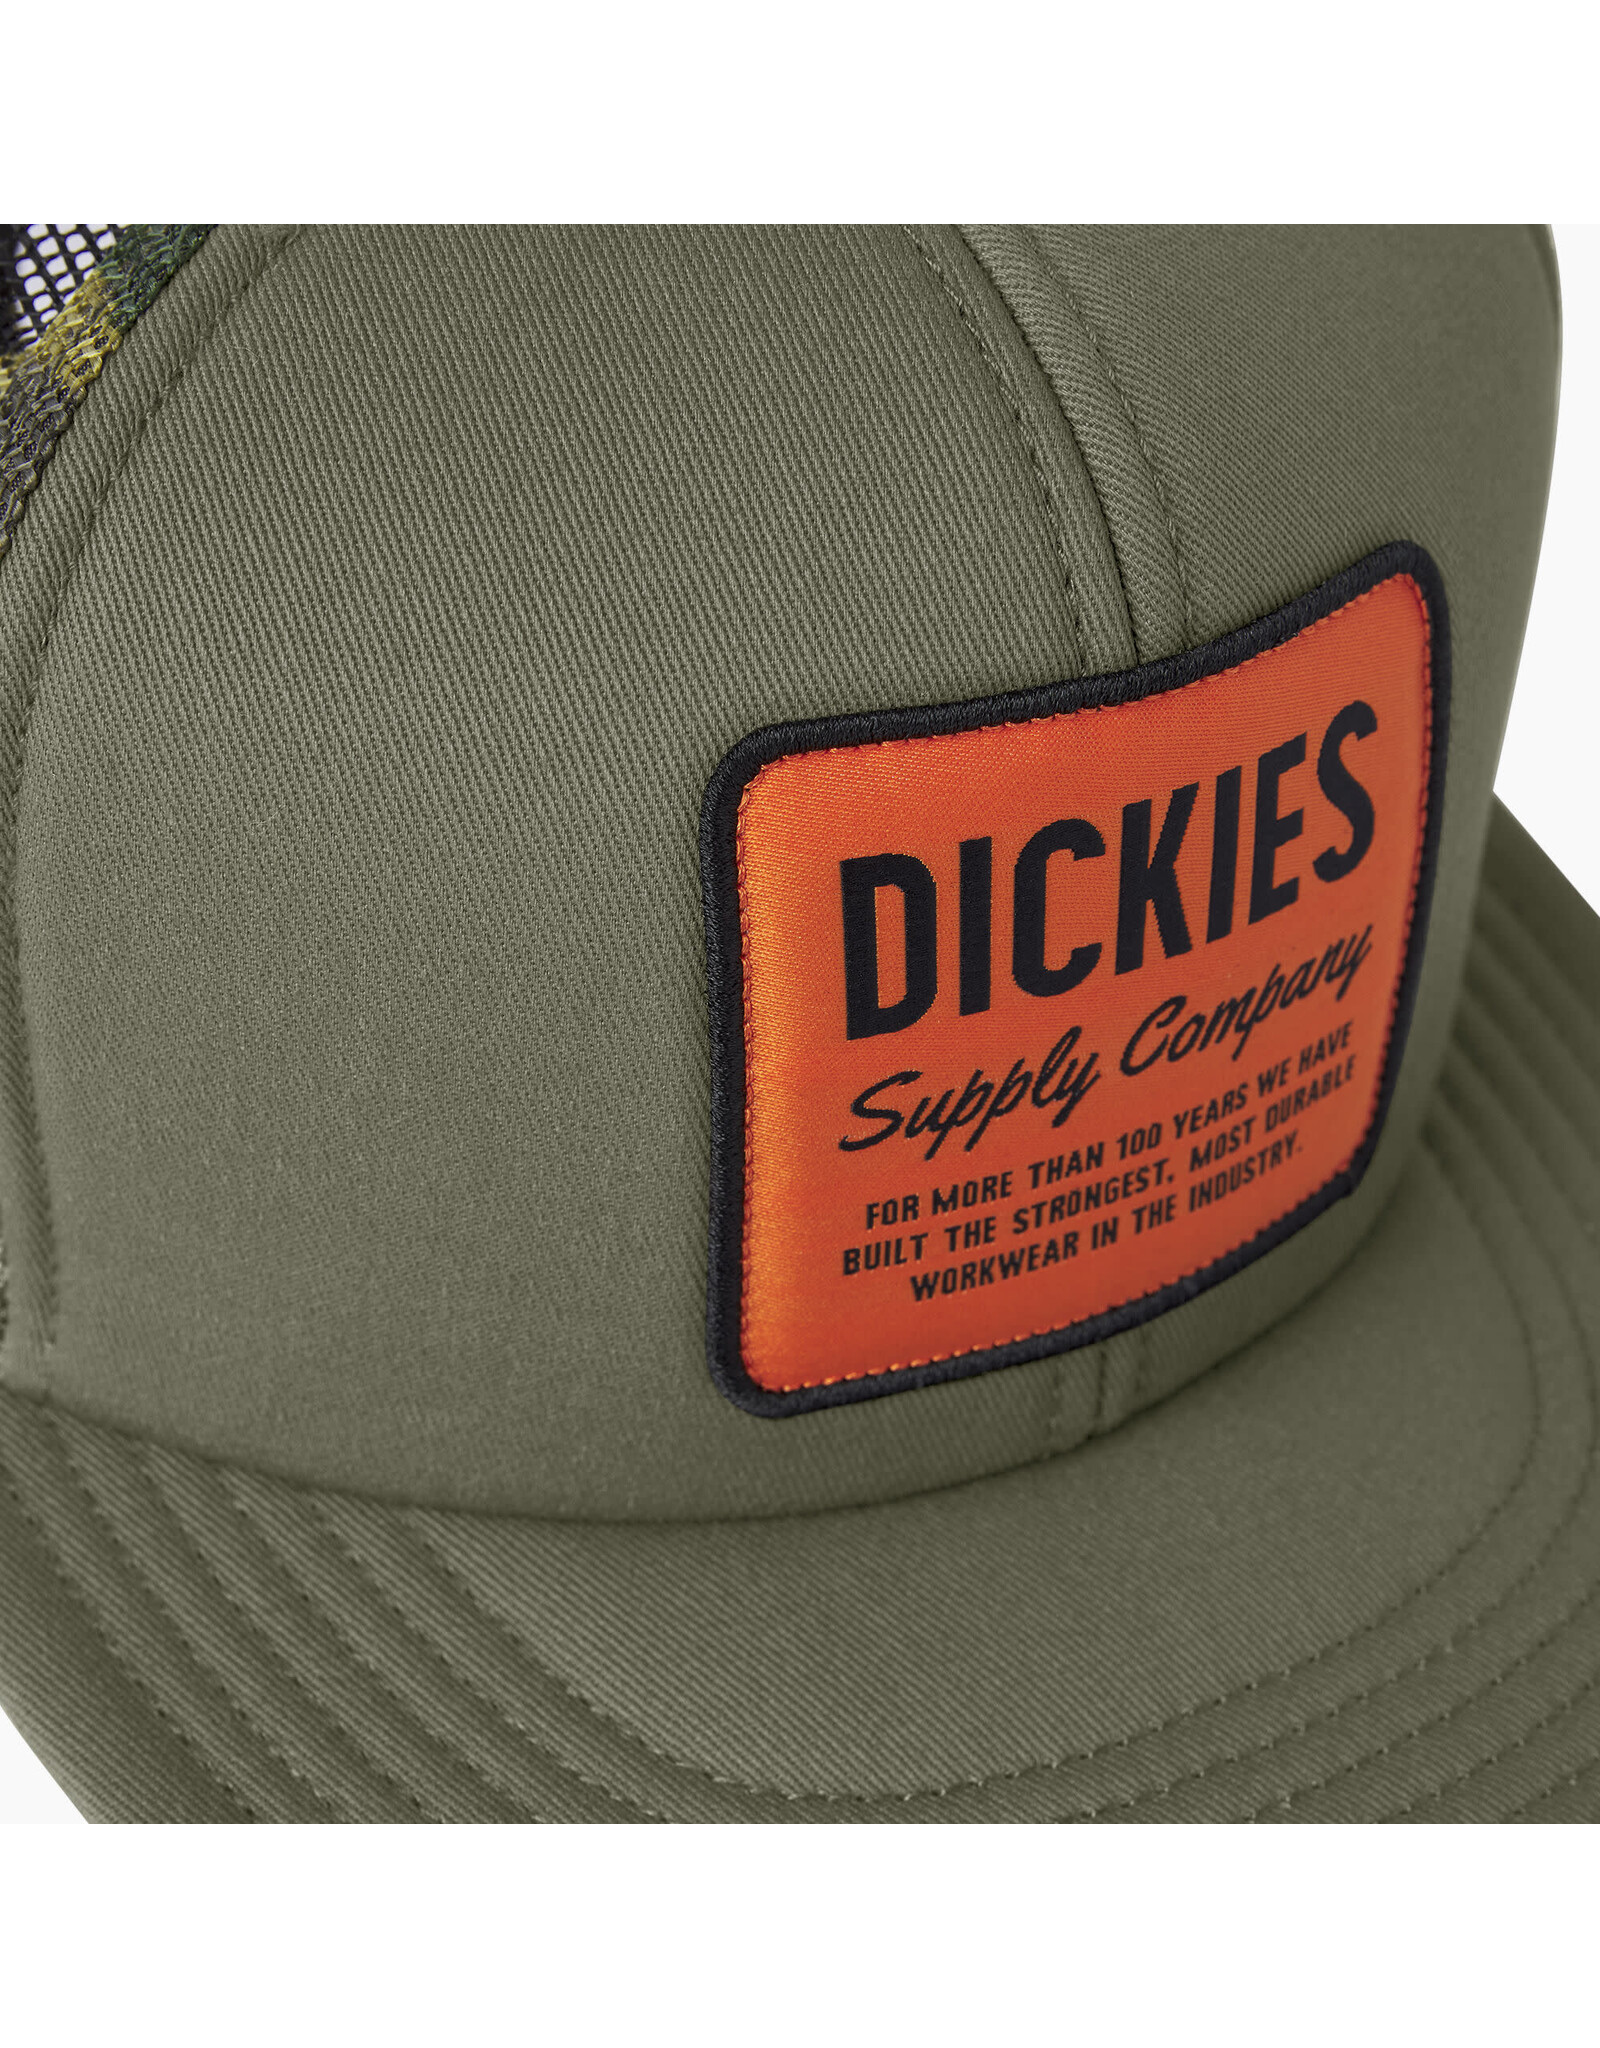 DICKIES Supply Company Trucker Hat Moss Green - WHC104MS